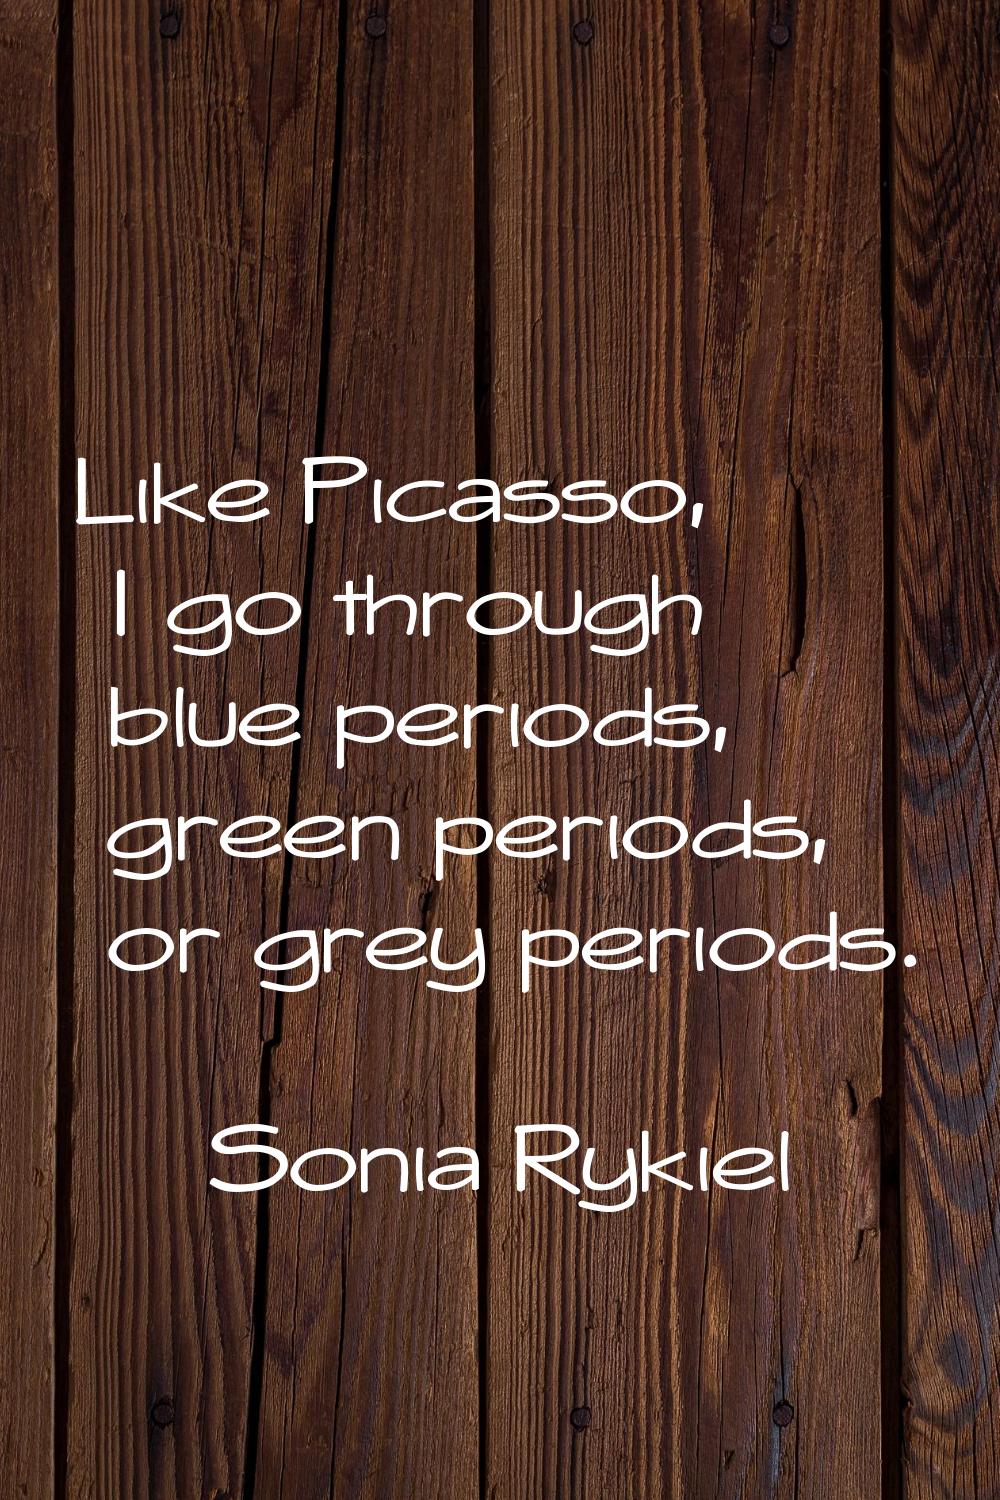 Like Picasso, I go through blue periods, green periods, or grey periods.